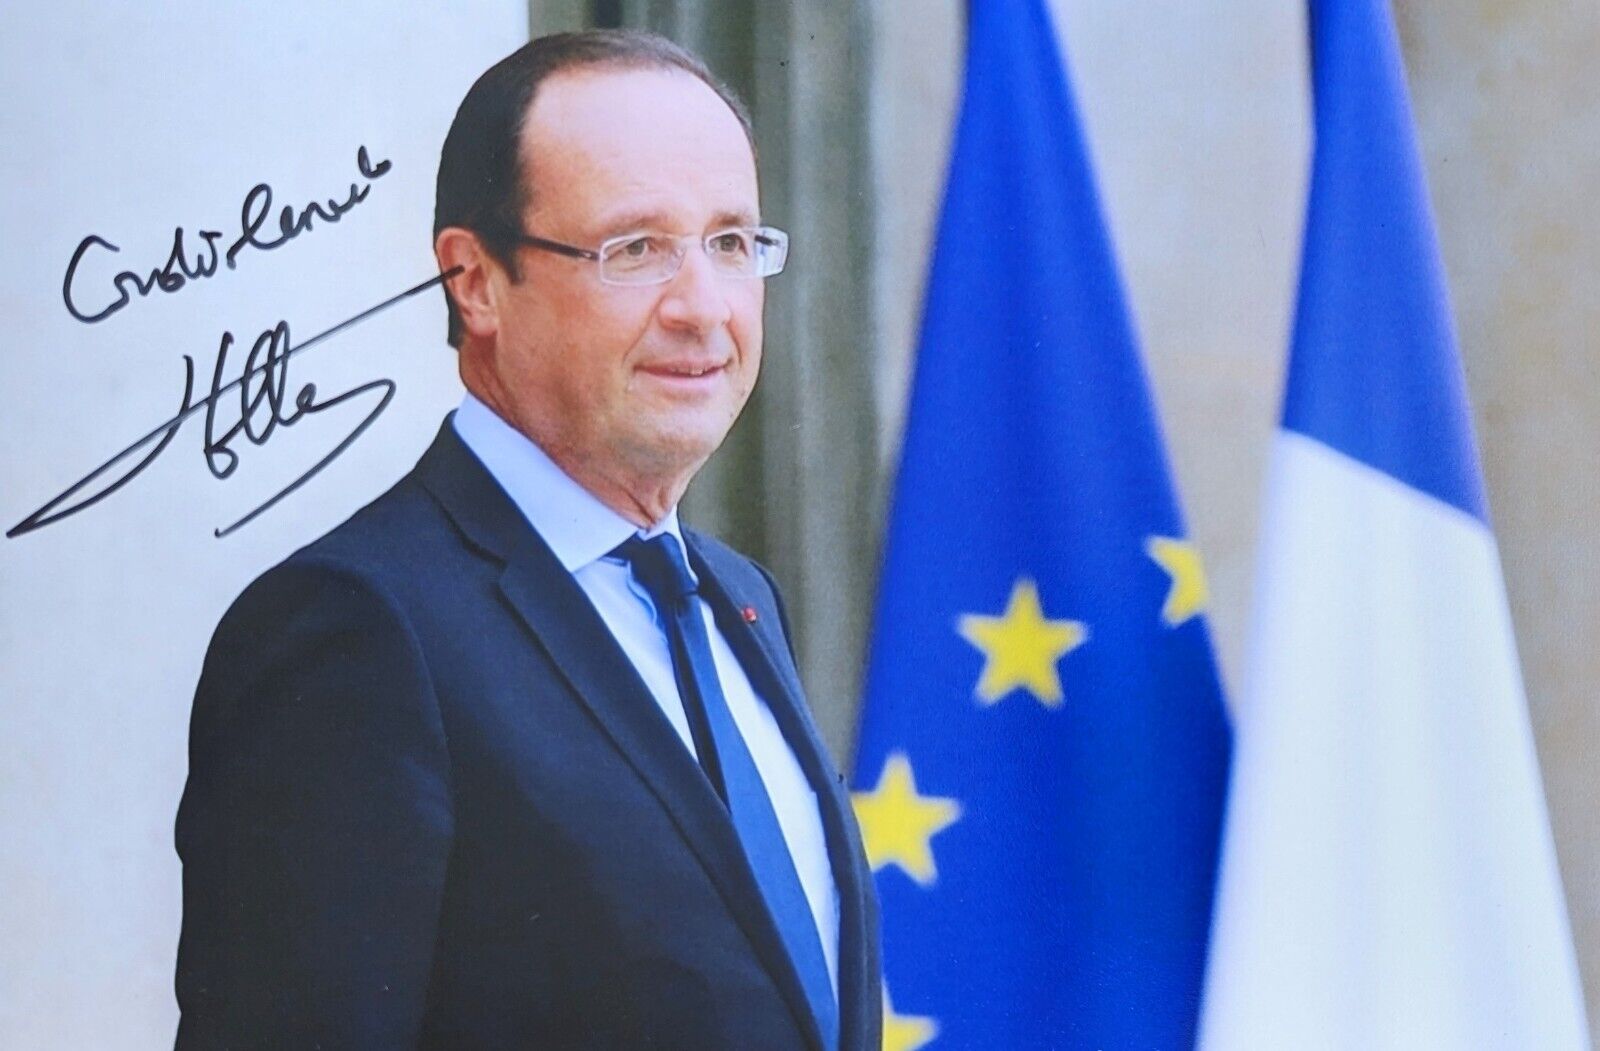 FRANÇOIS HOLLANDE (President of France) Signed/Autographed 6x4 Photograph